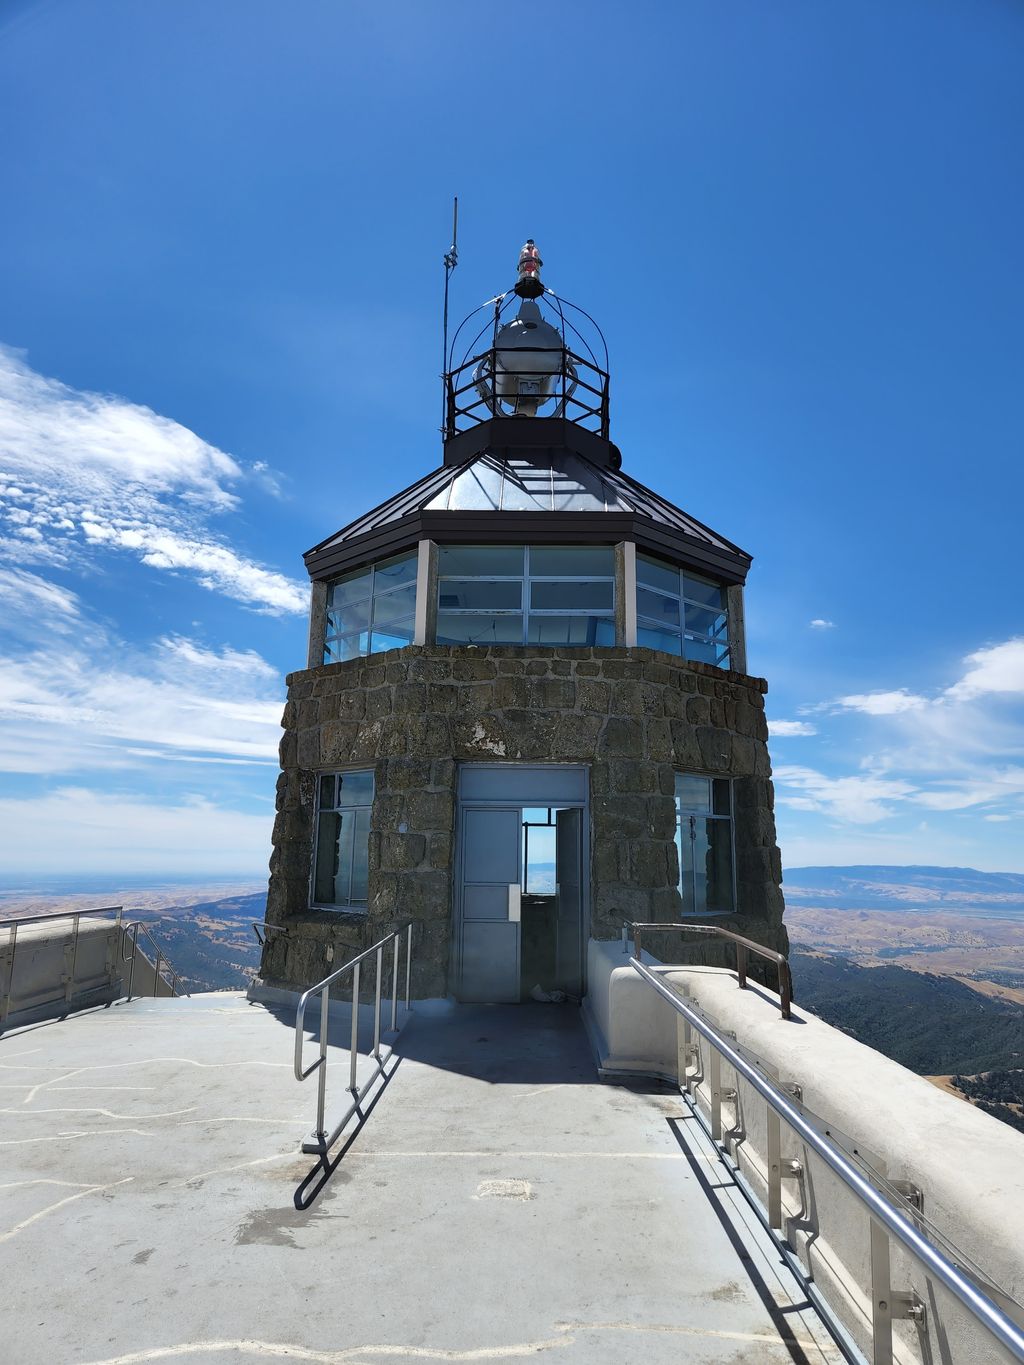 Mount Diablo Summit Museum and Trailhead